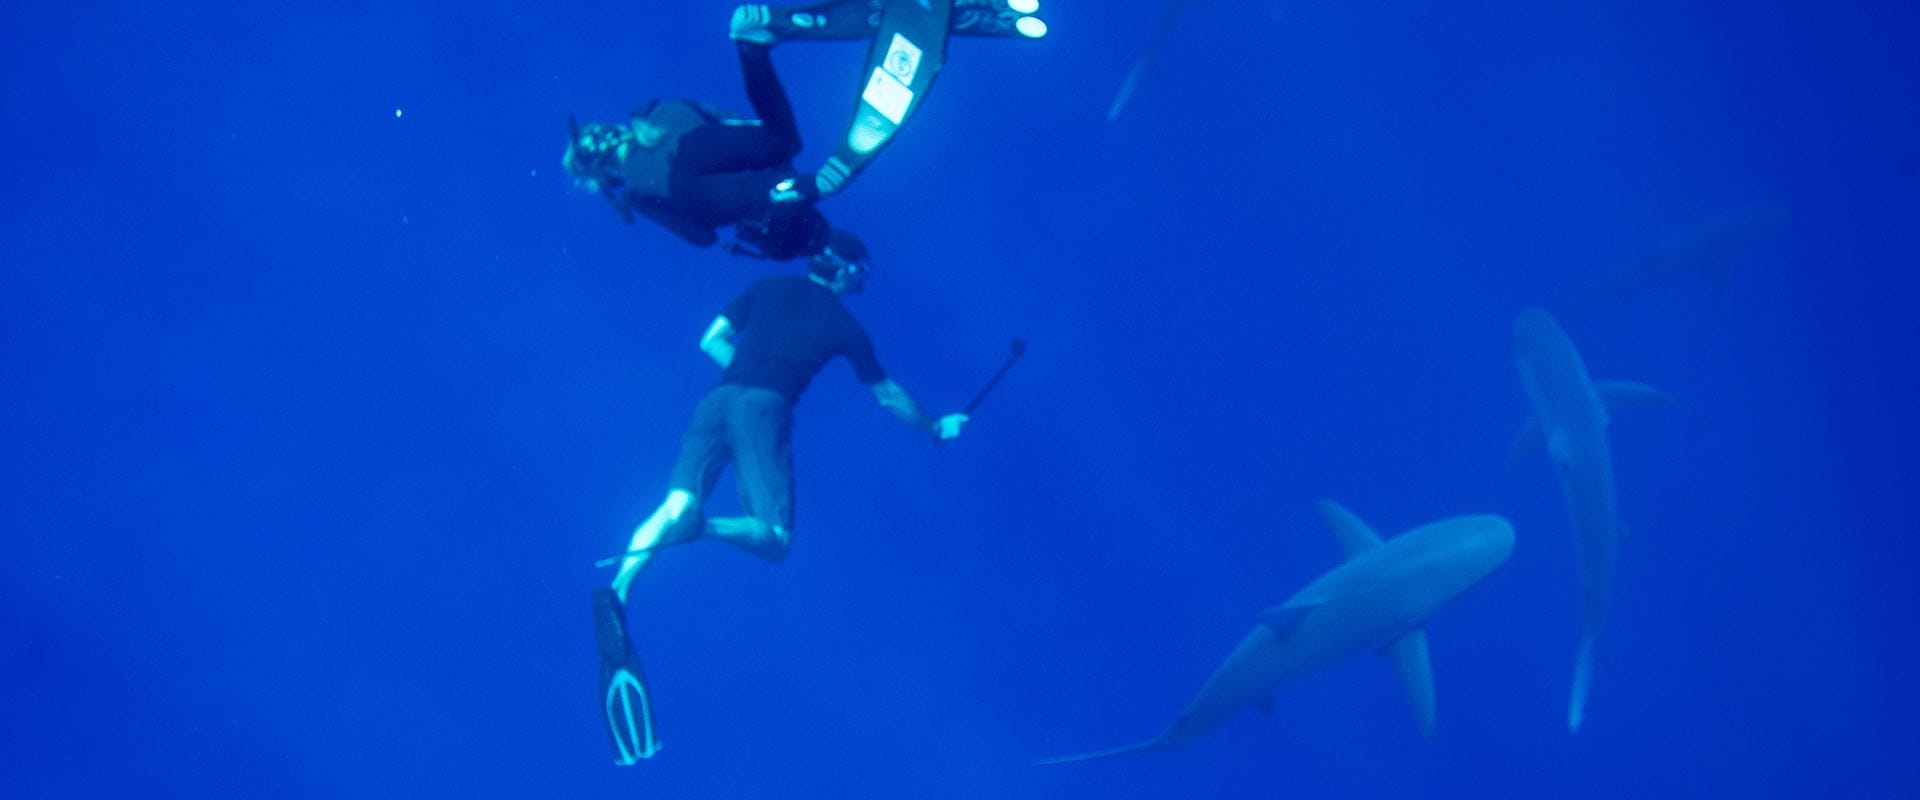 Experience this amazing Hawaii shark encounter